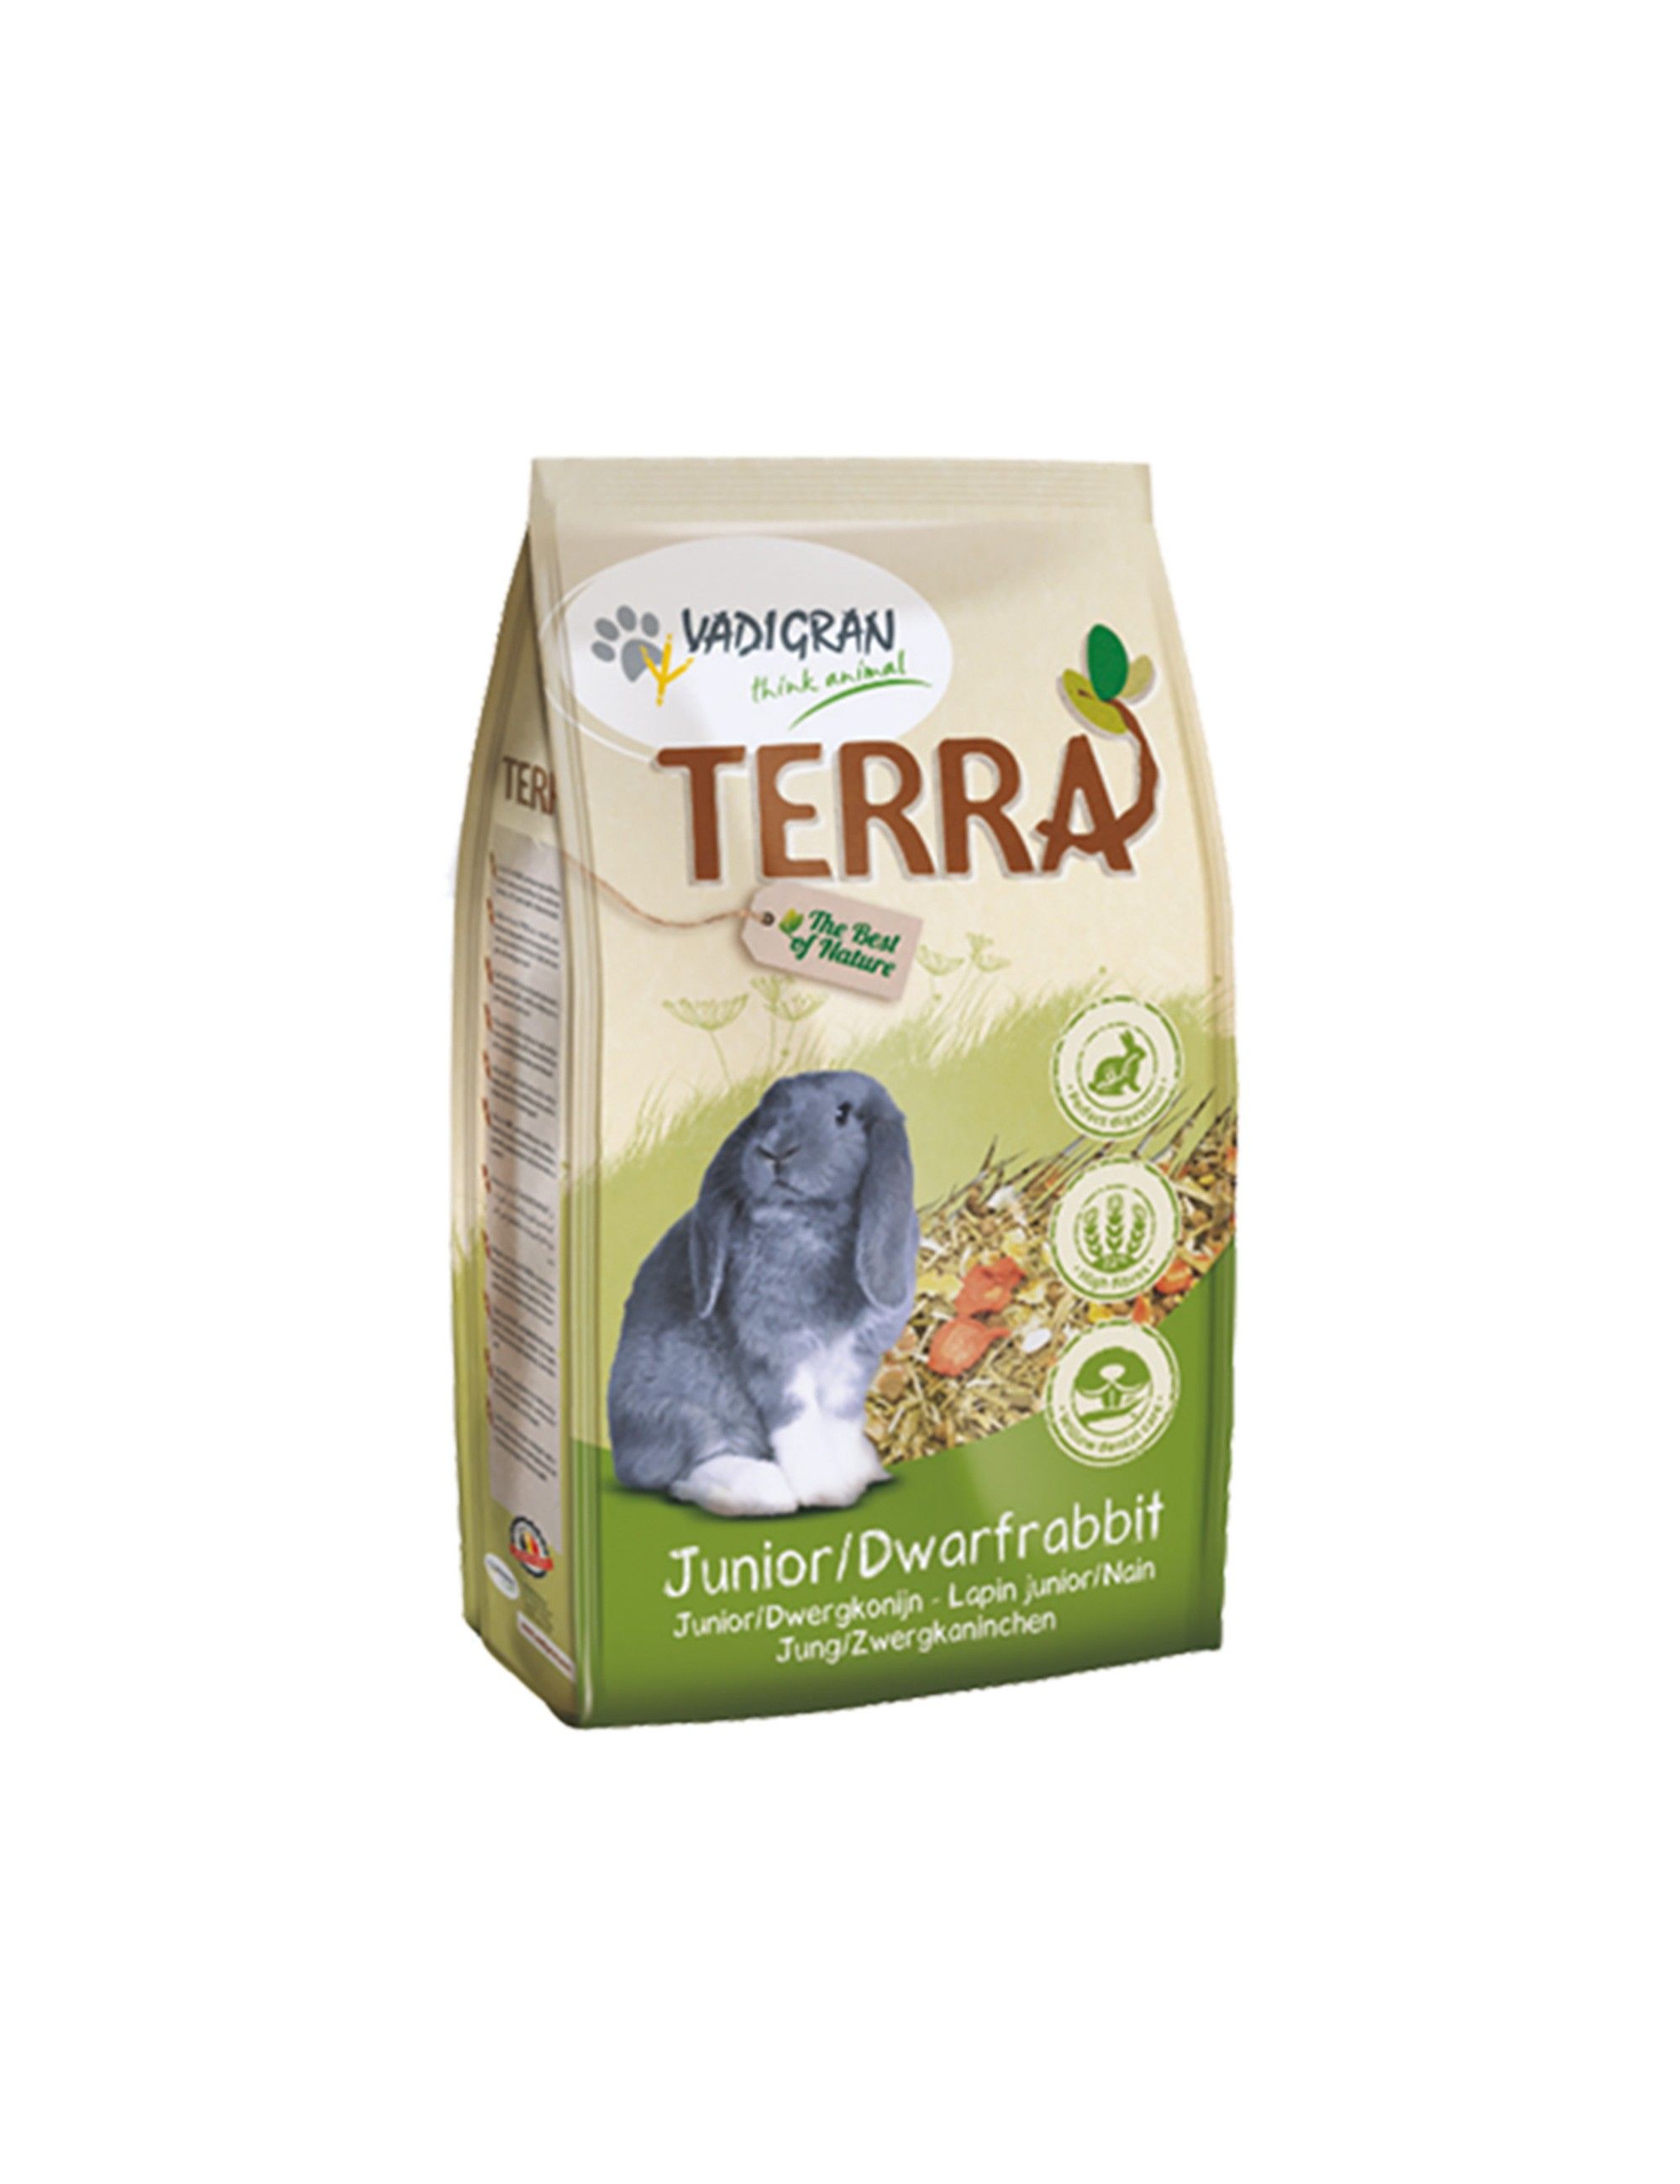 VADIGRAN - Terra Junior & Dwarf Rabbit